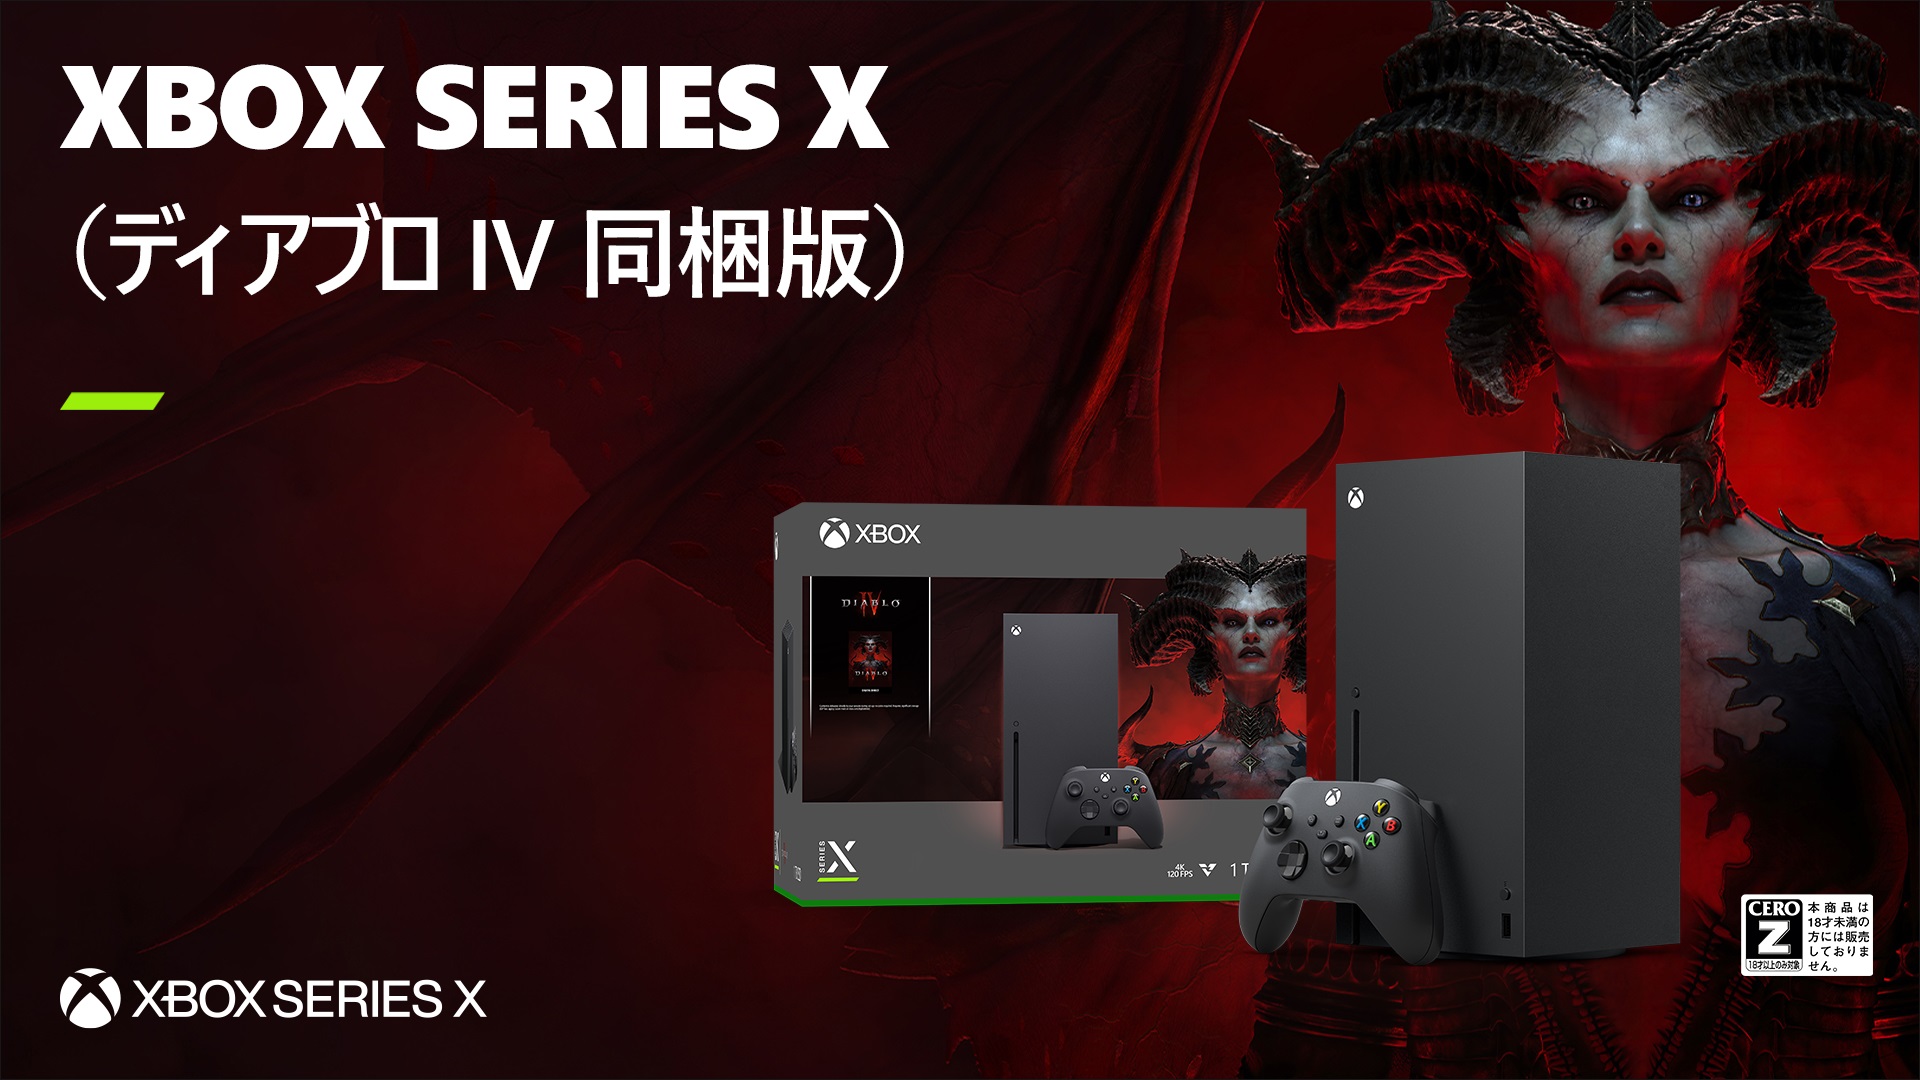 Xbox Series X 」が6月6日に発売決定。4月28日より予約開始 - GAME Watch